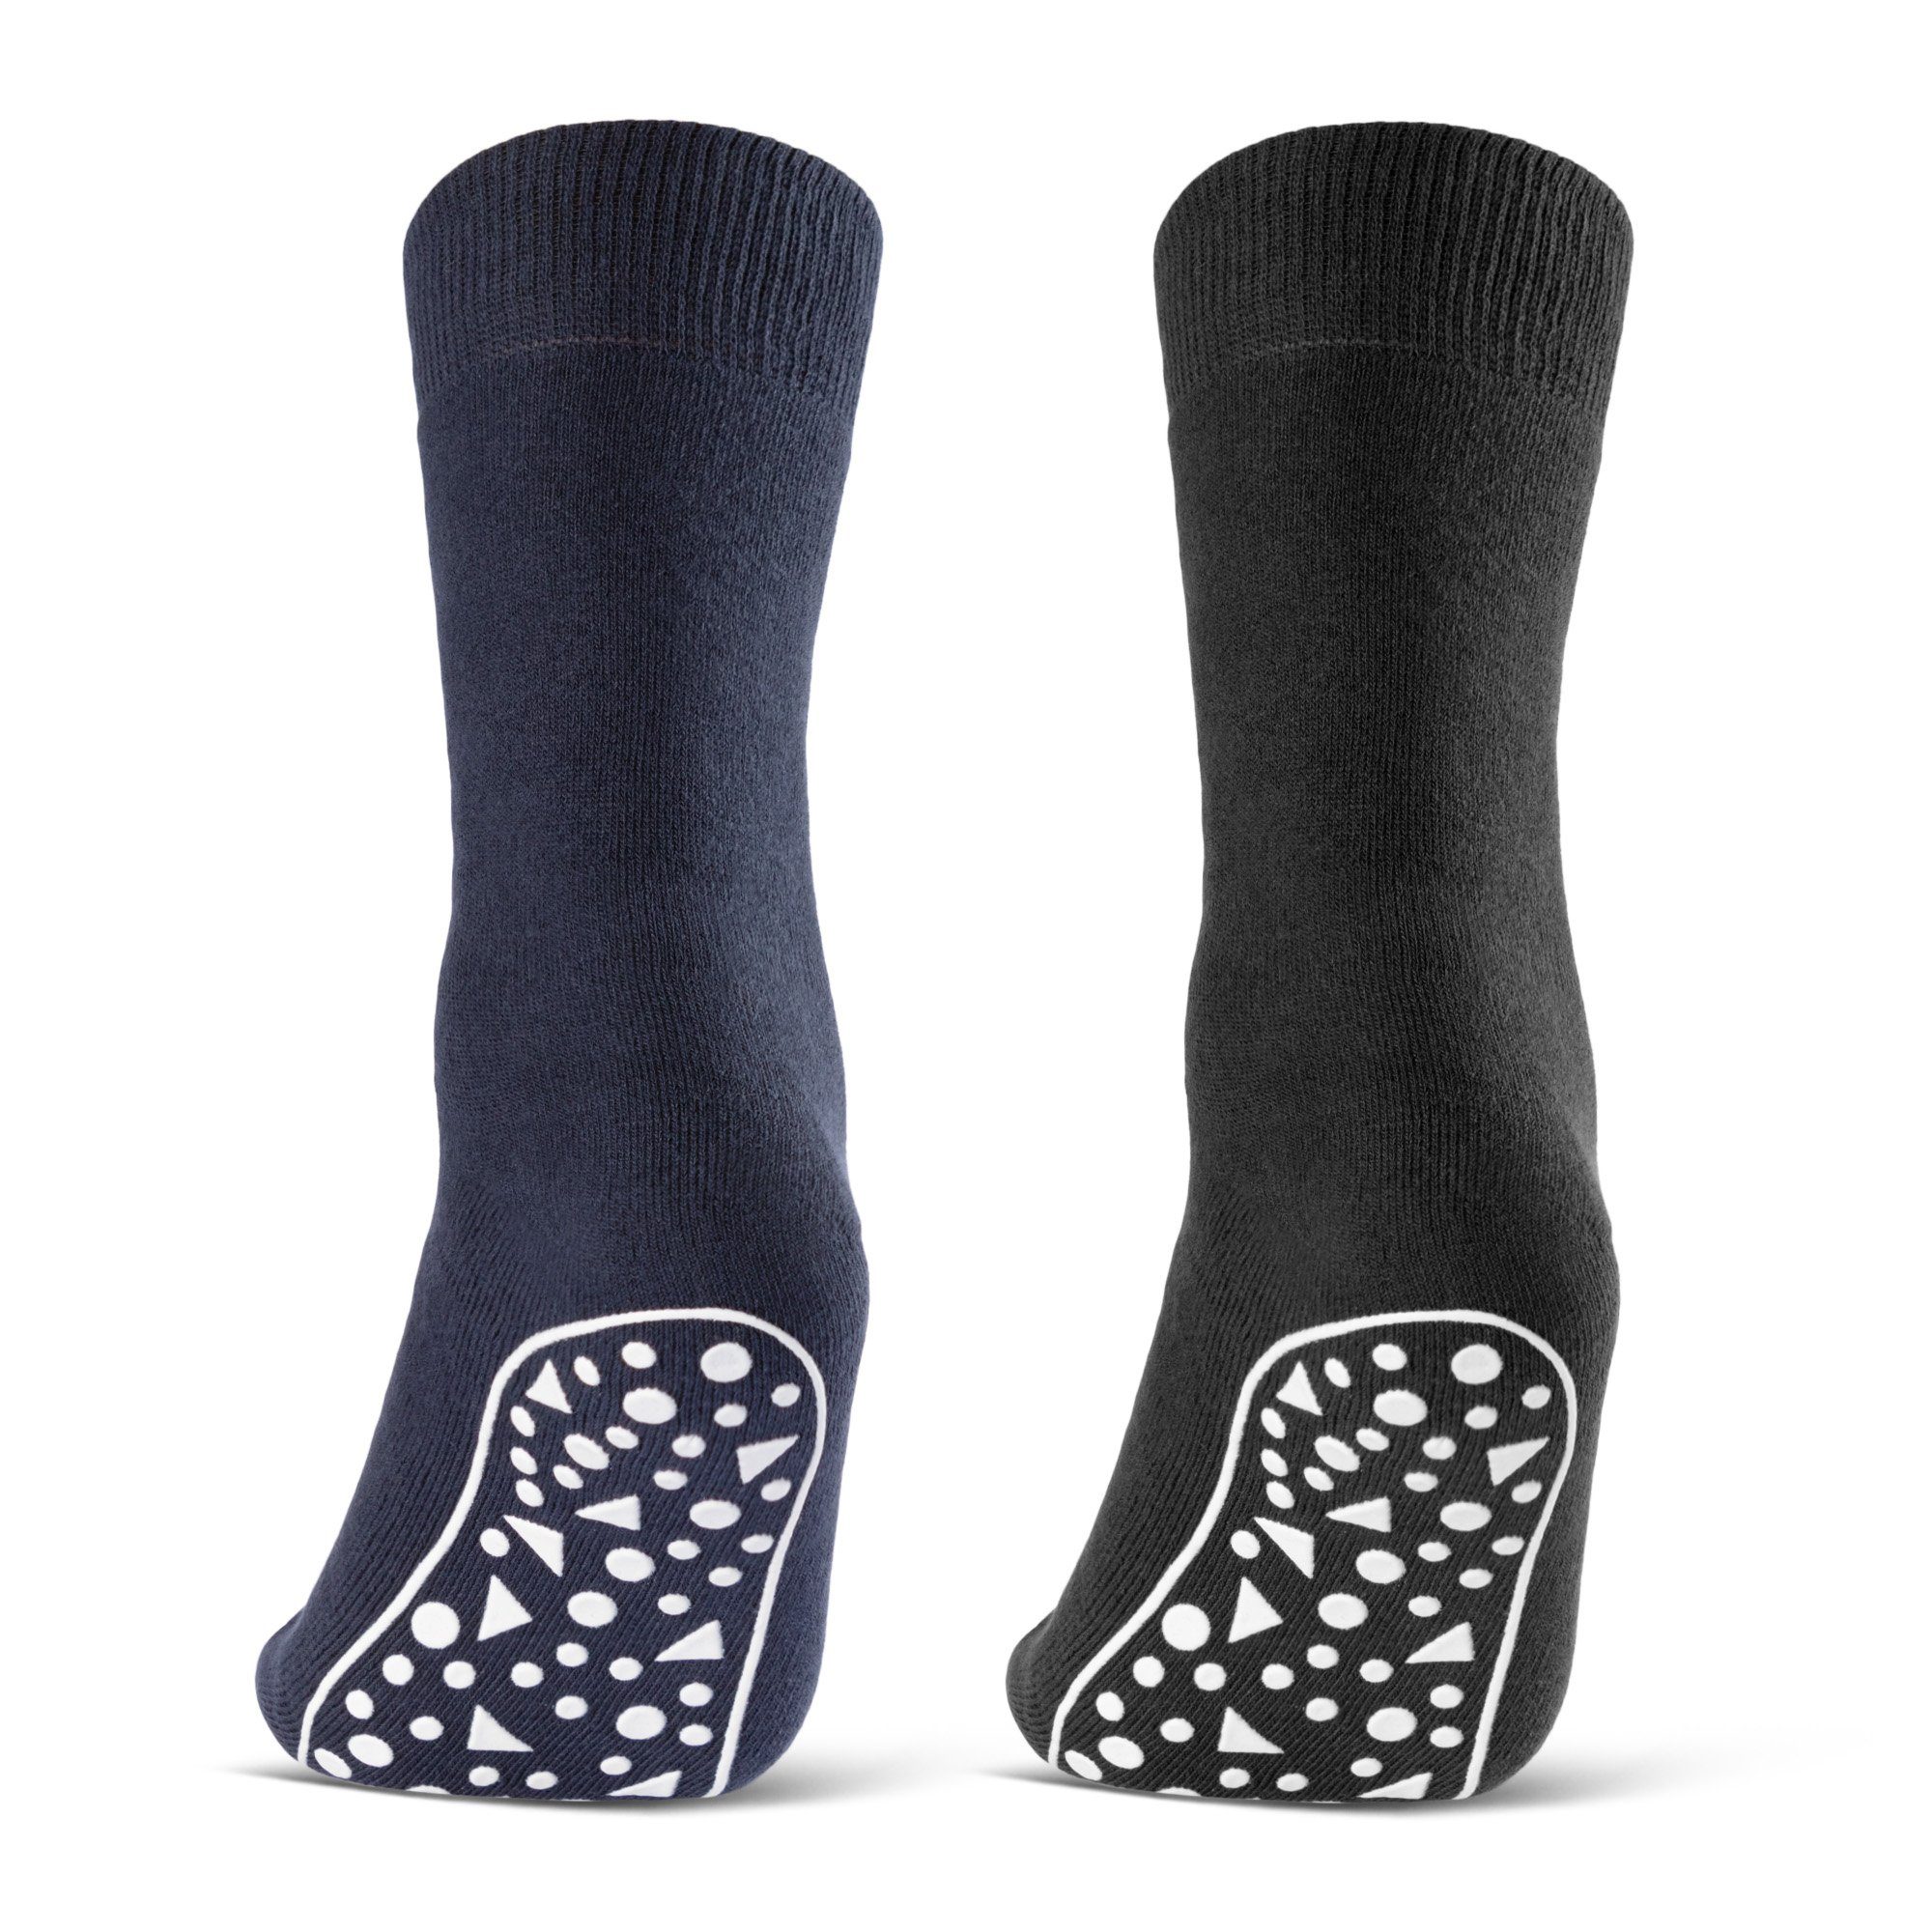 sockenkauf24 ABS-Socken 2, 4 oder 6 Paar Damen & Herren Anti Rutsch Socken Baumwolle (Schwarz, Blau, Grau, 2-Paar, 47-50) Stoppersocken Noppensocken - 21395 WP